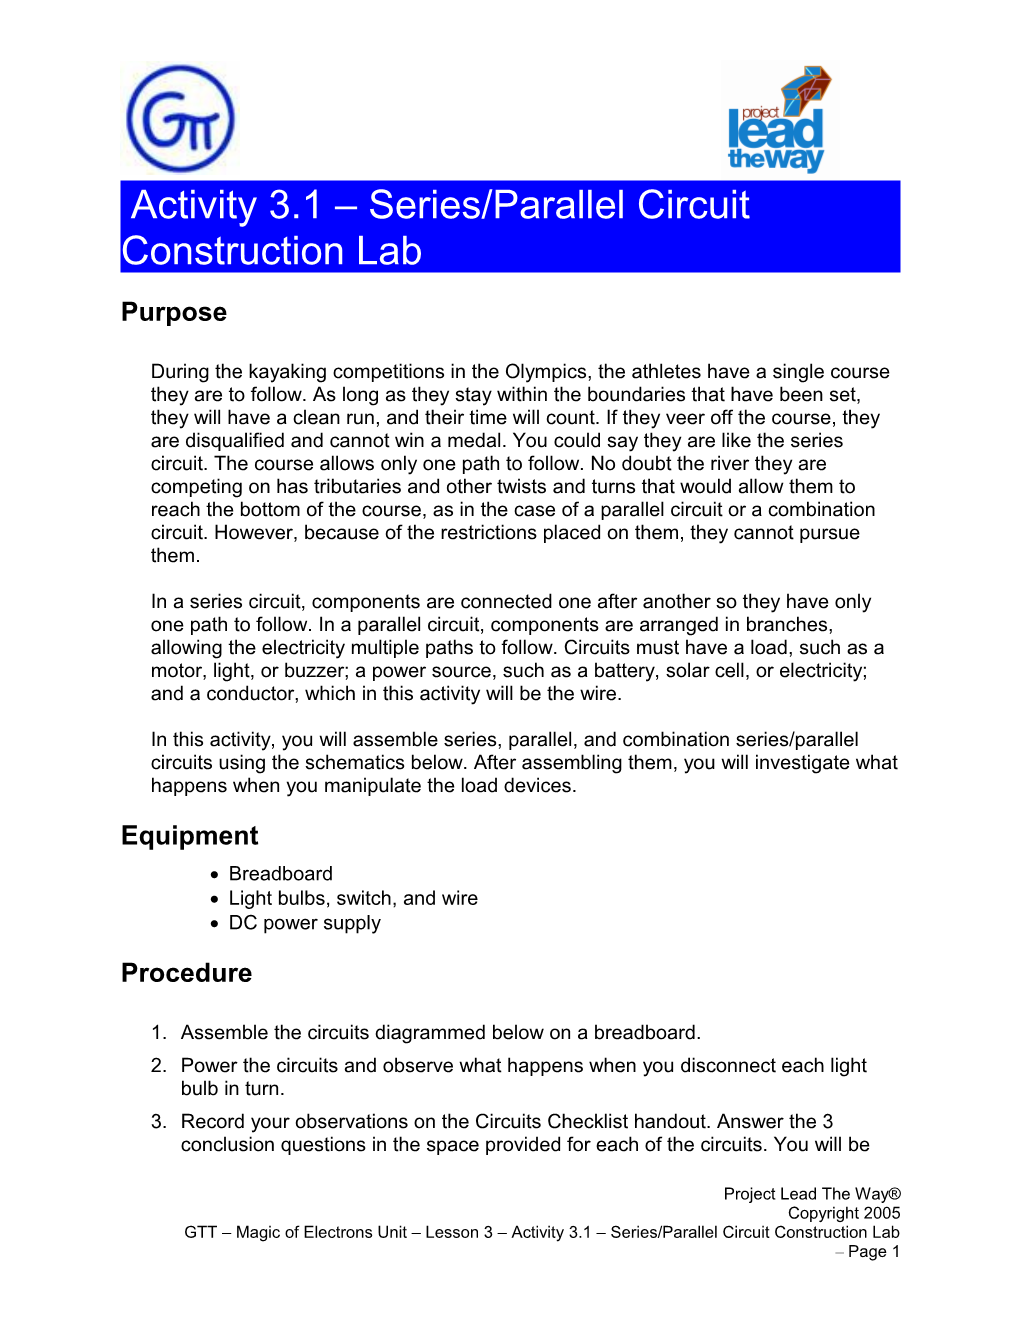 Activity 3.1 Series/Parallel Circuit Construction Lab